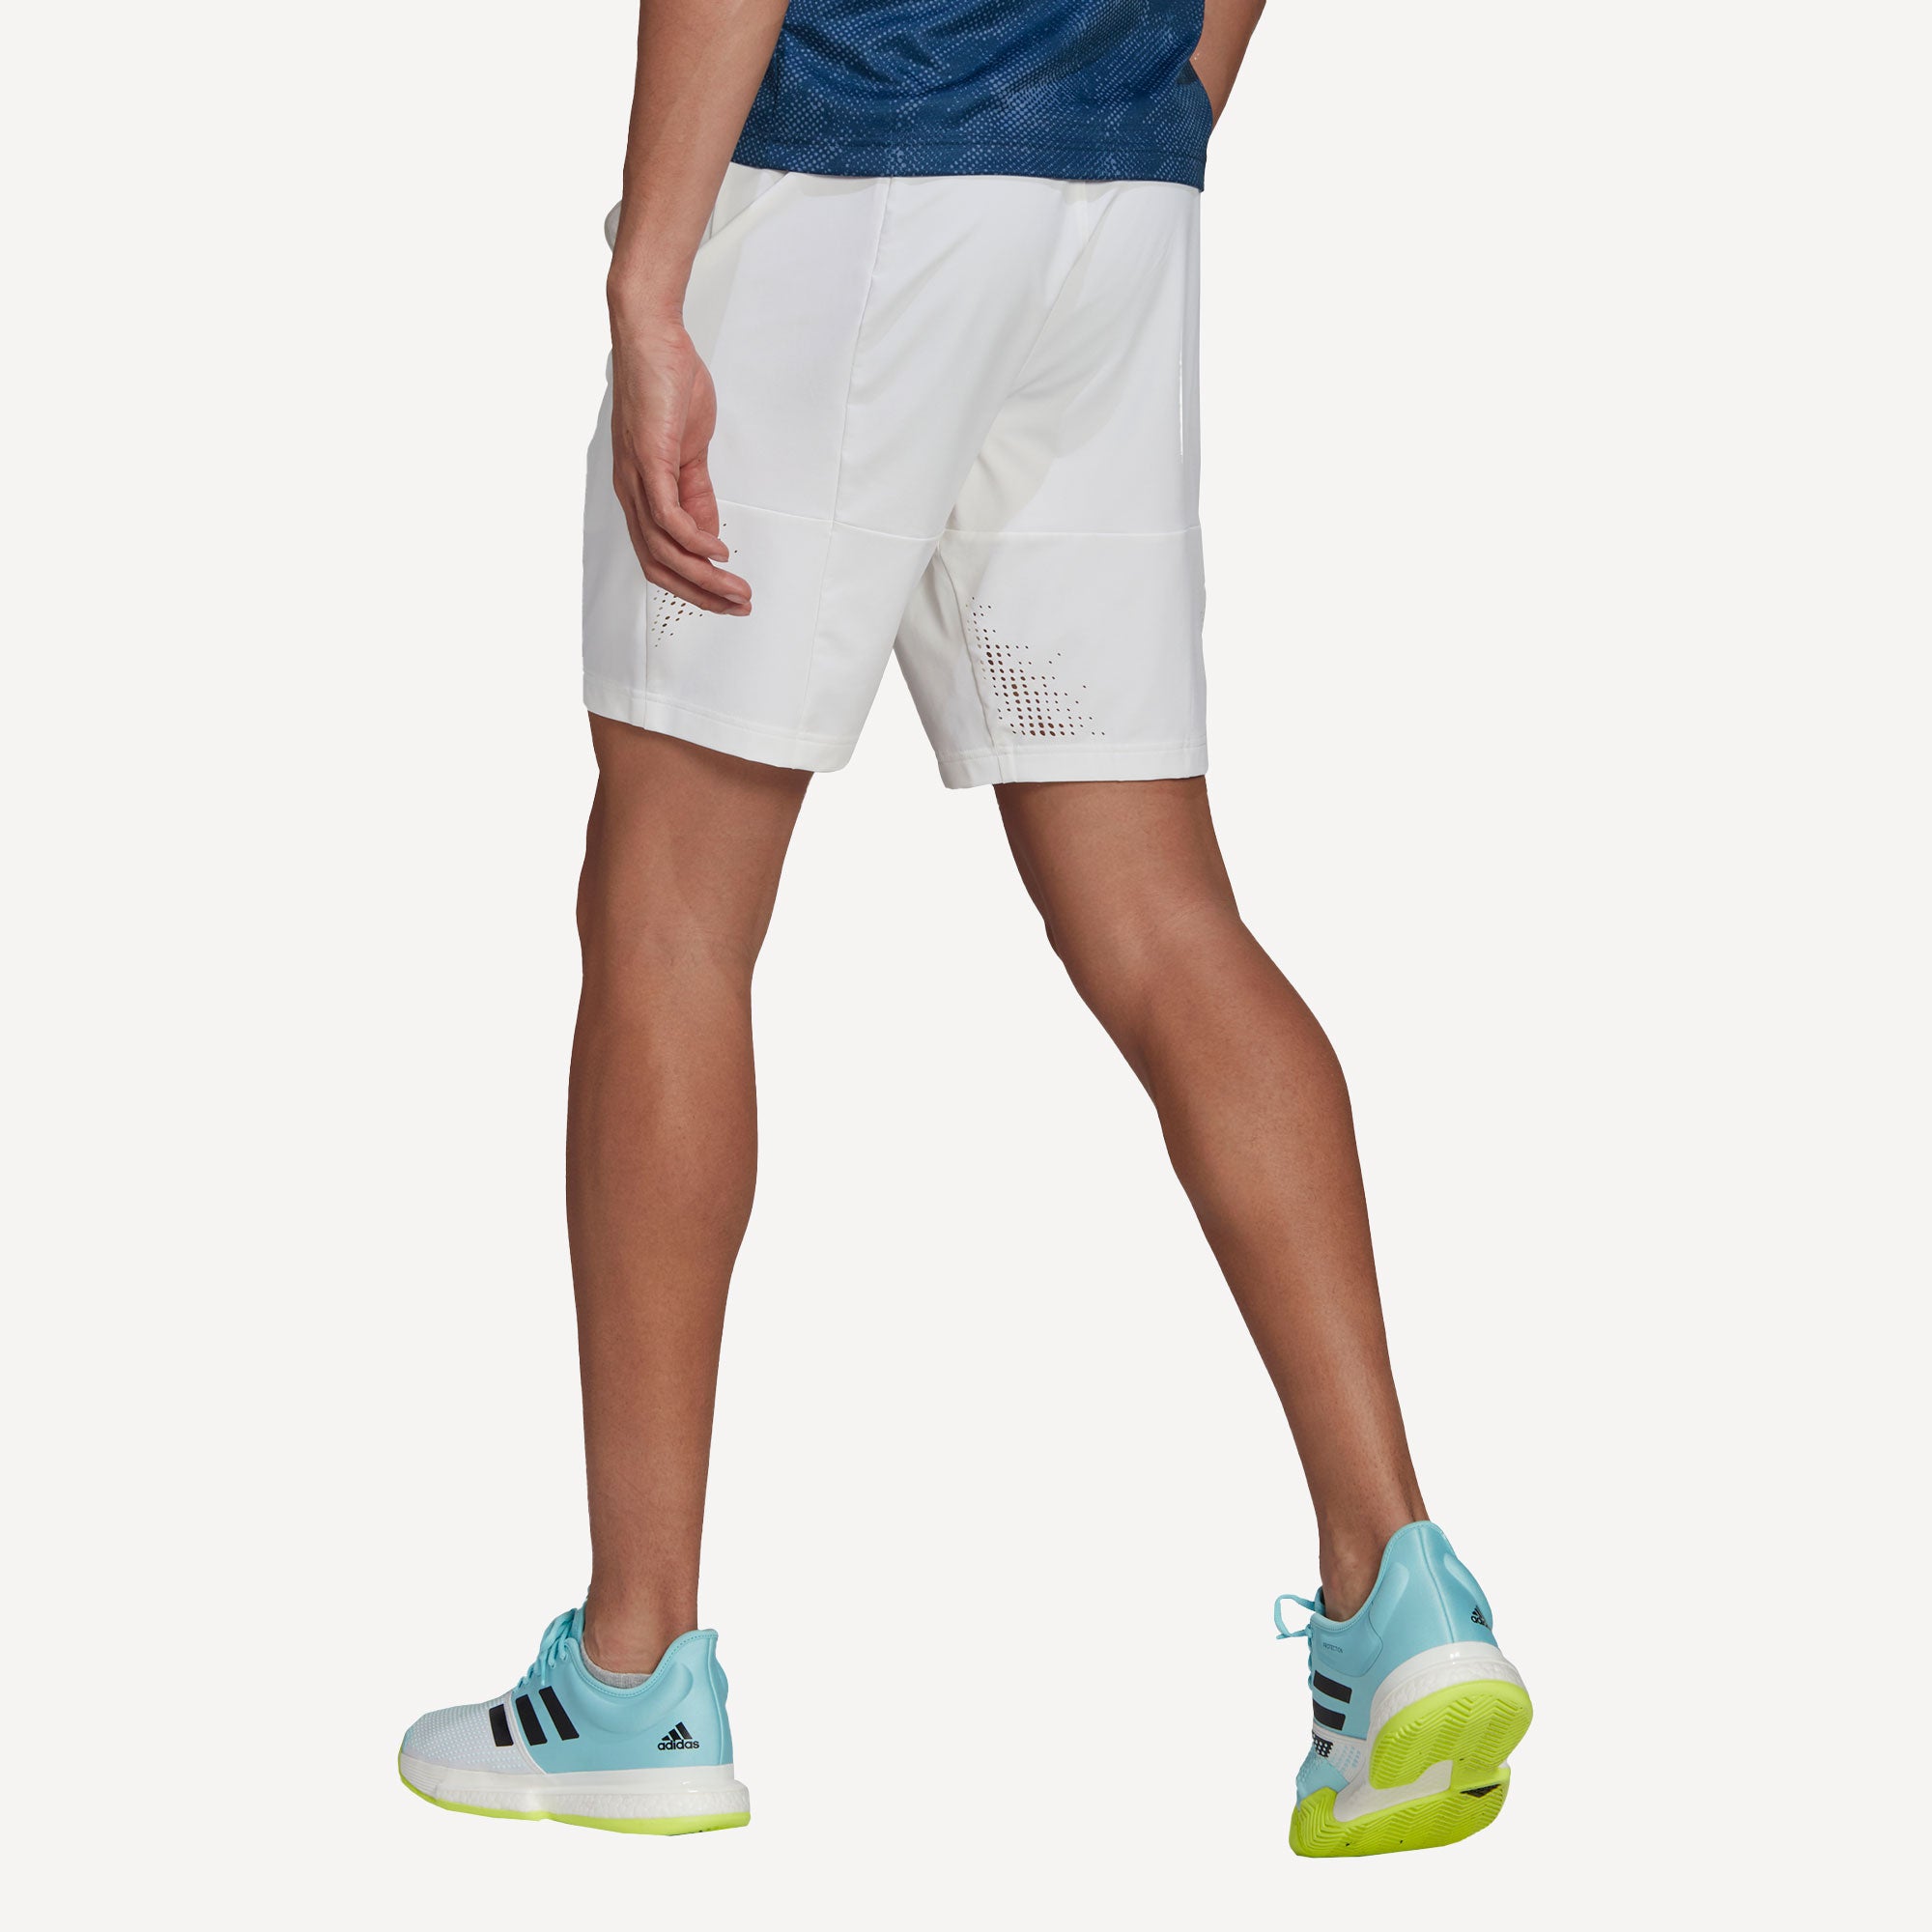 adidas Ergo Primeblue Men's 9-Inch Tennis Shorts White (2)